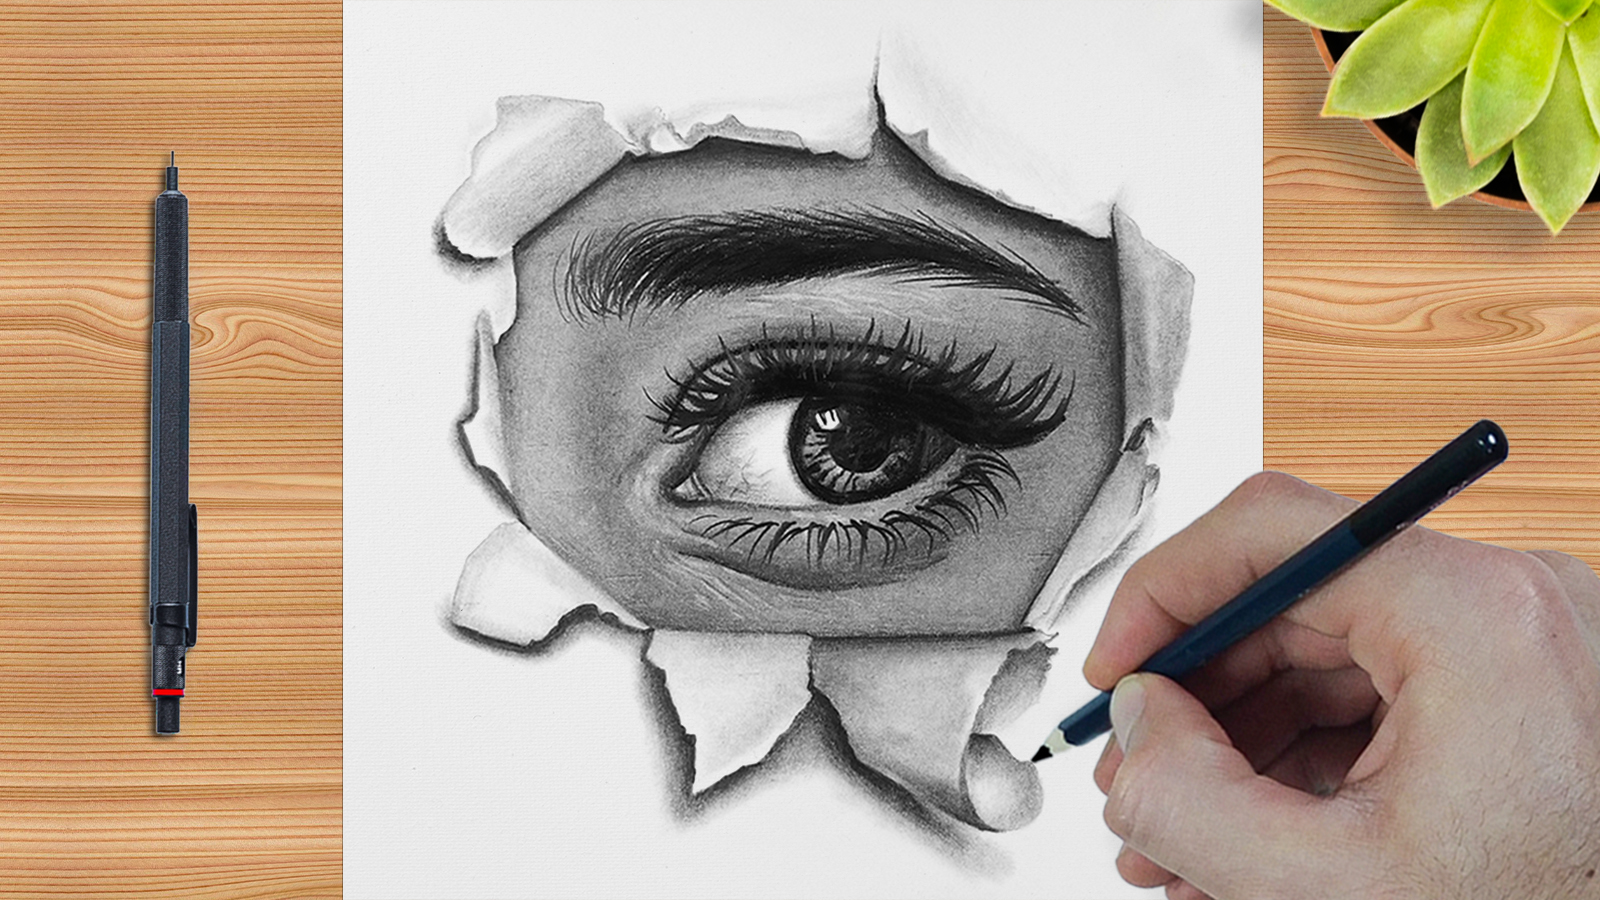 Creative 3D pencil drawings by Ben Heine – Vuing.com